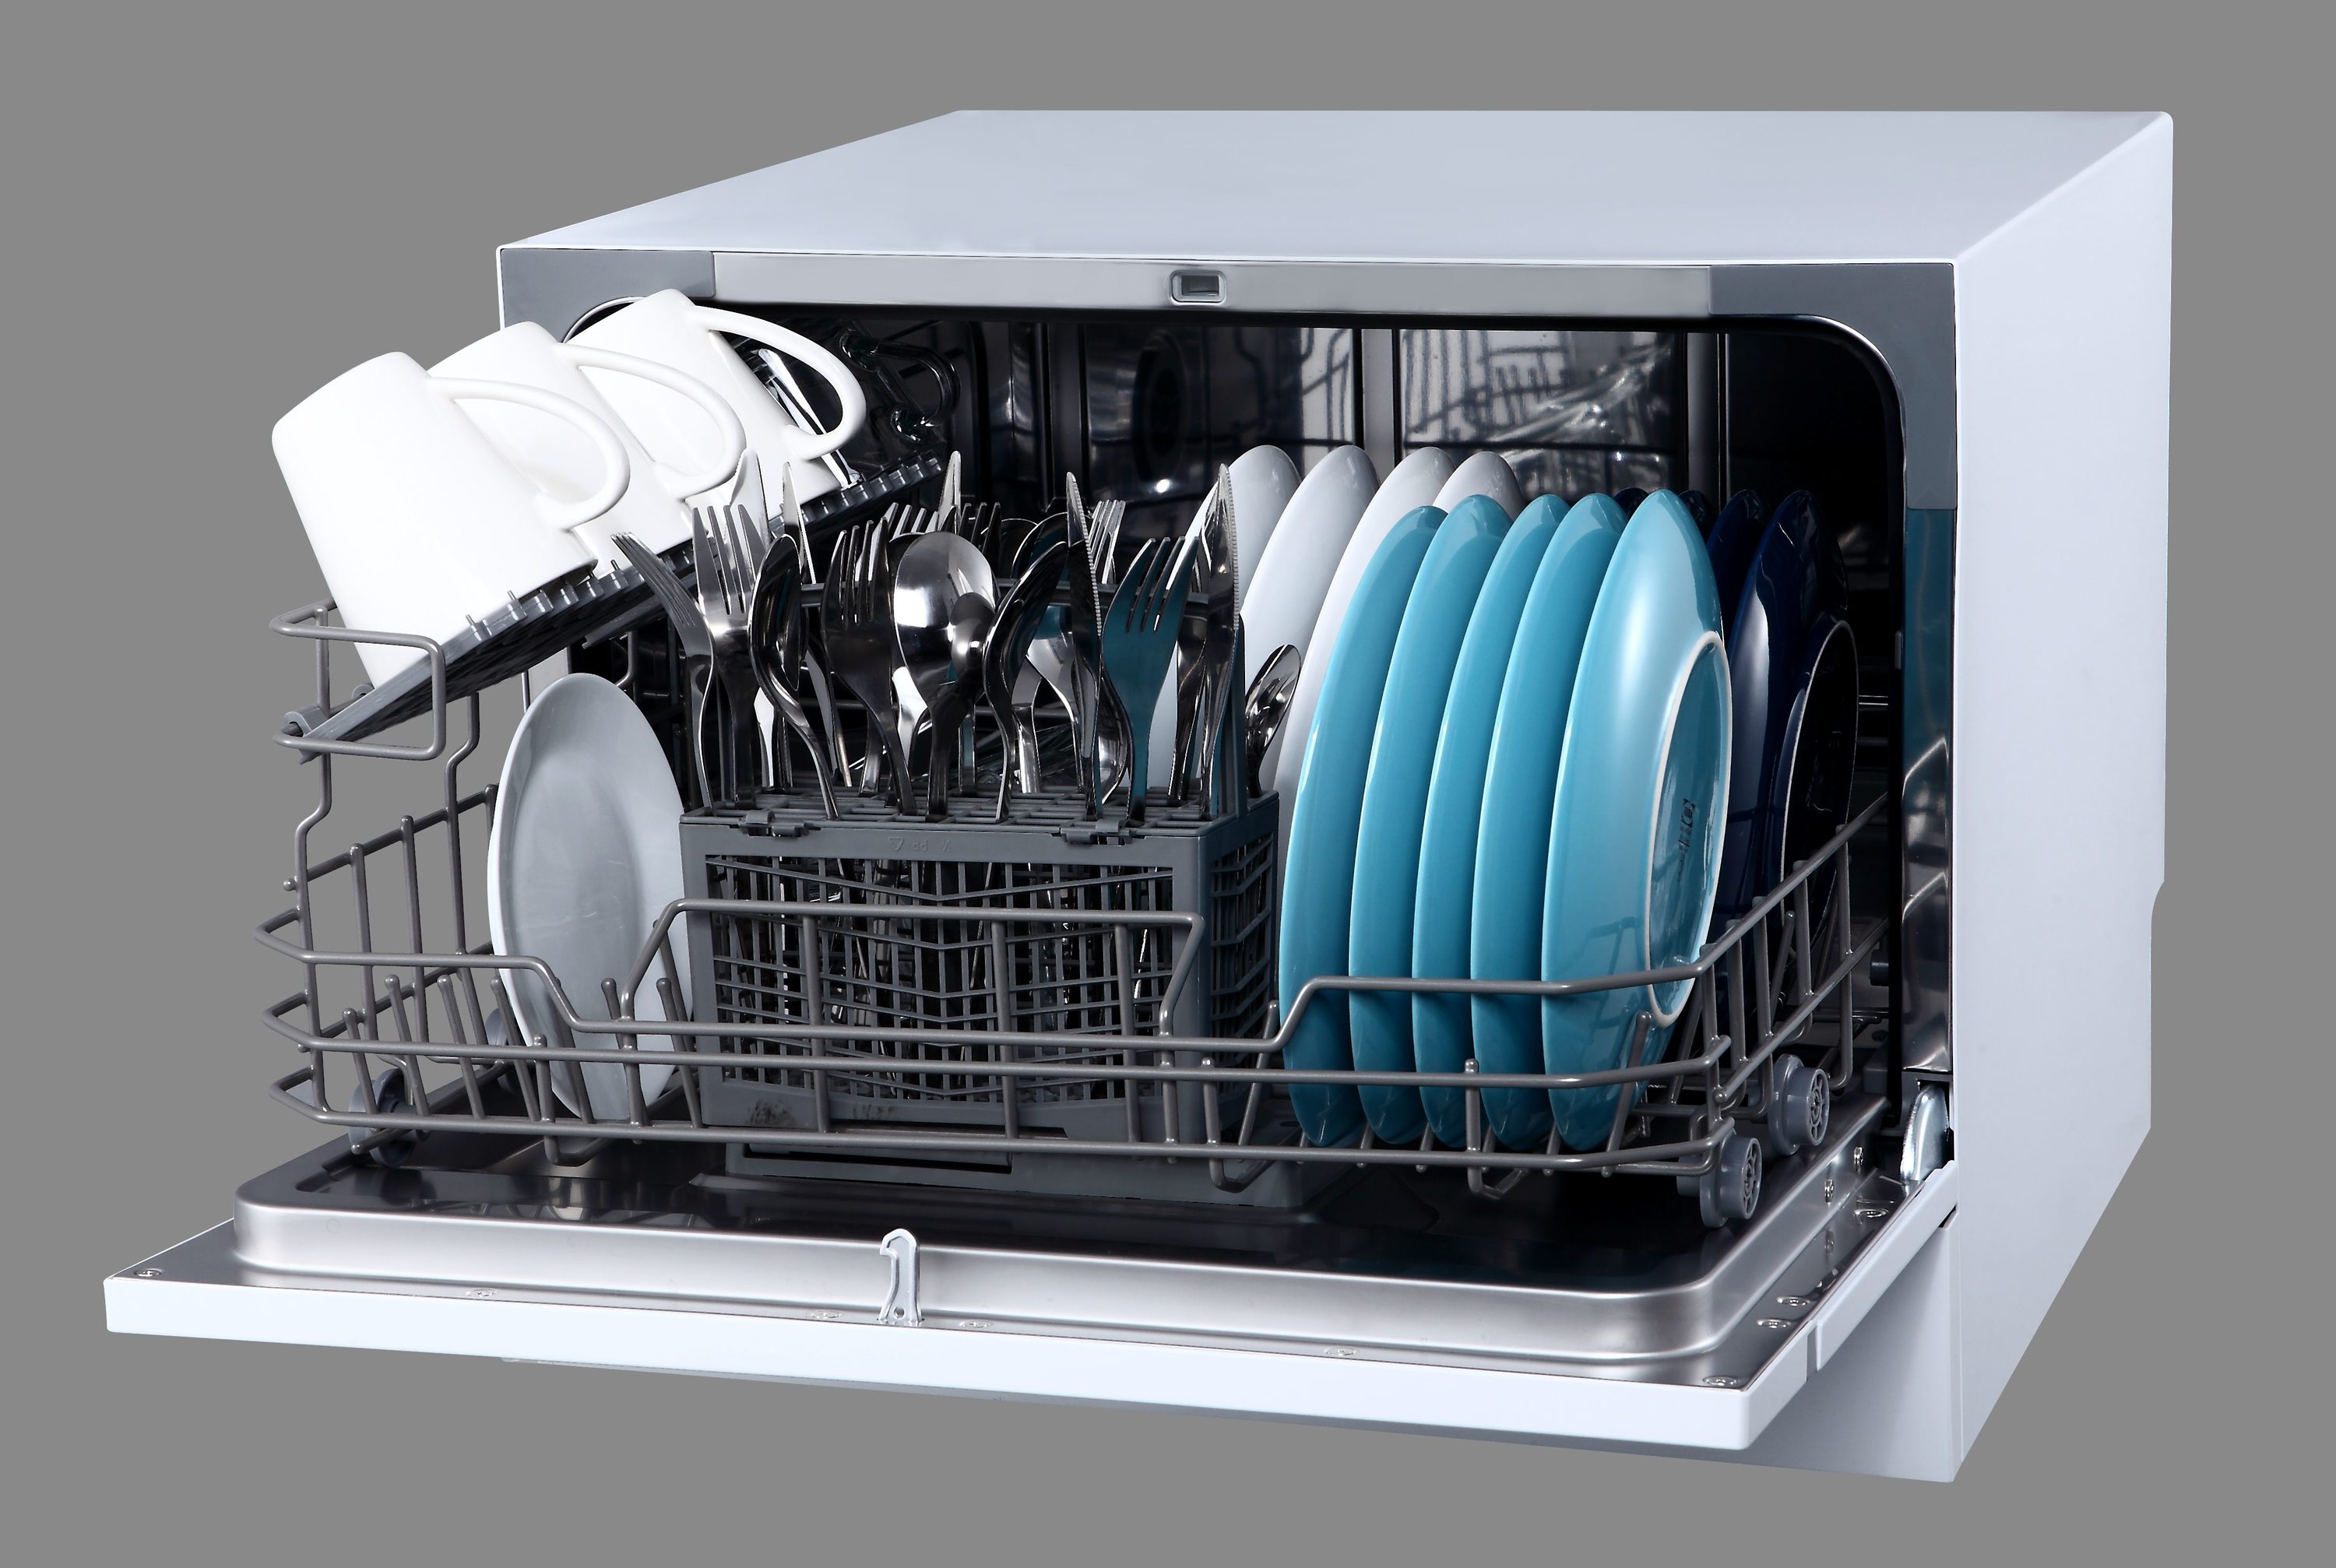 EdgeStar 21.63-in Portable Countertop Dishwasher (Metallic Look